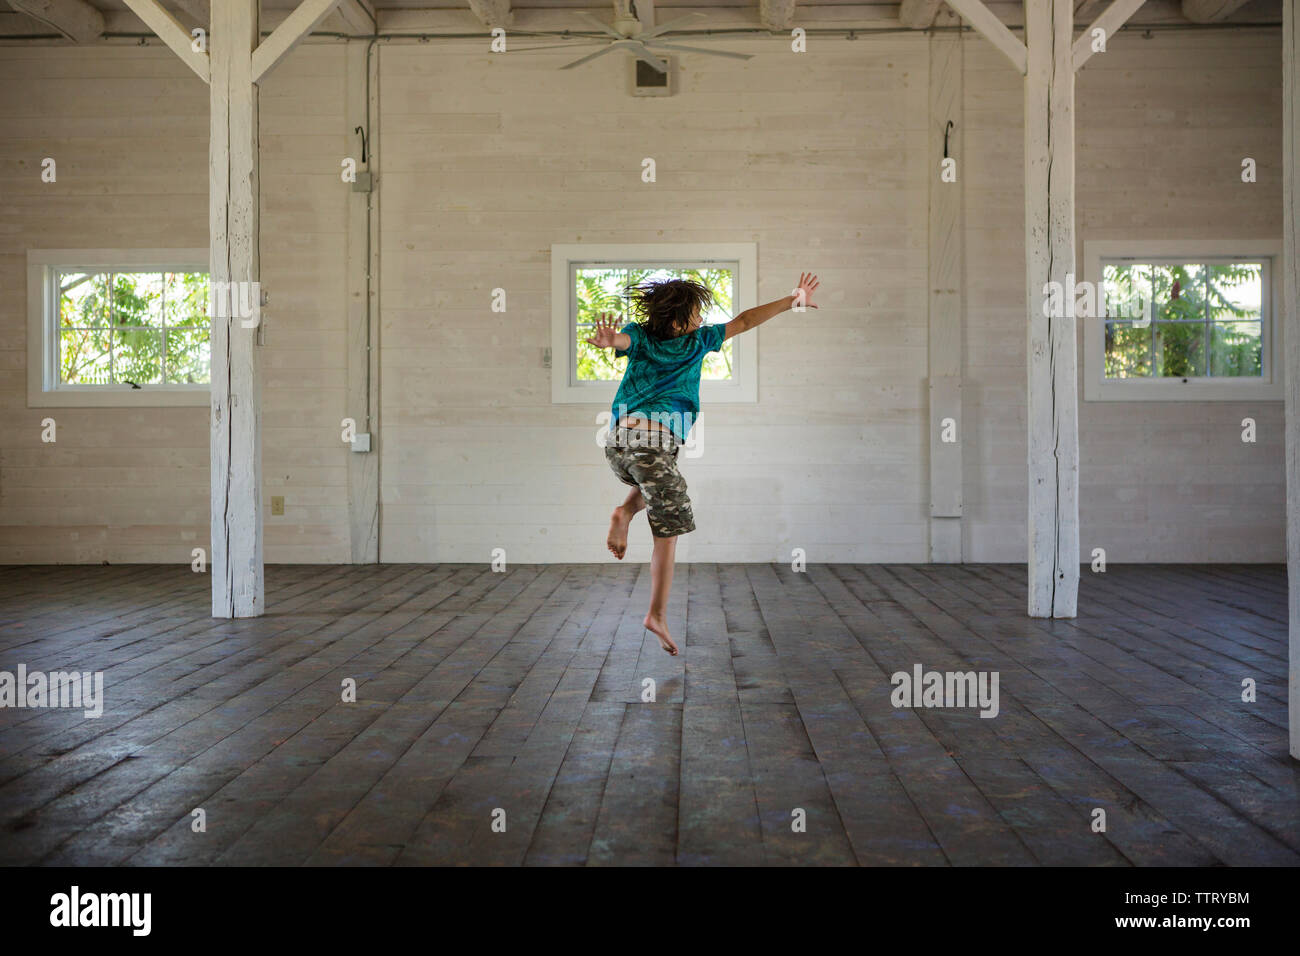 Rear view of happy boy dancing on hardwood floor against wall in barn Stock Photo